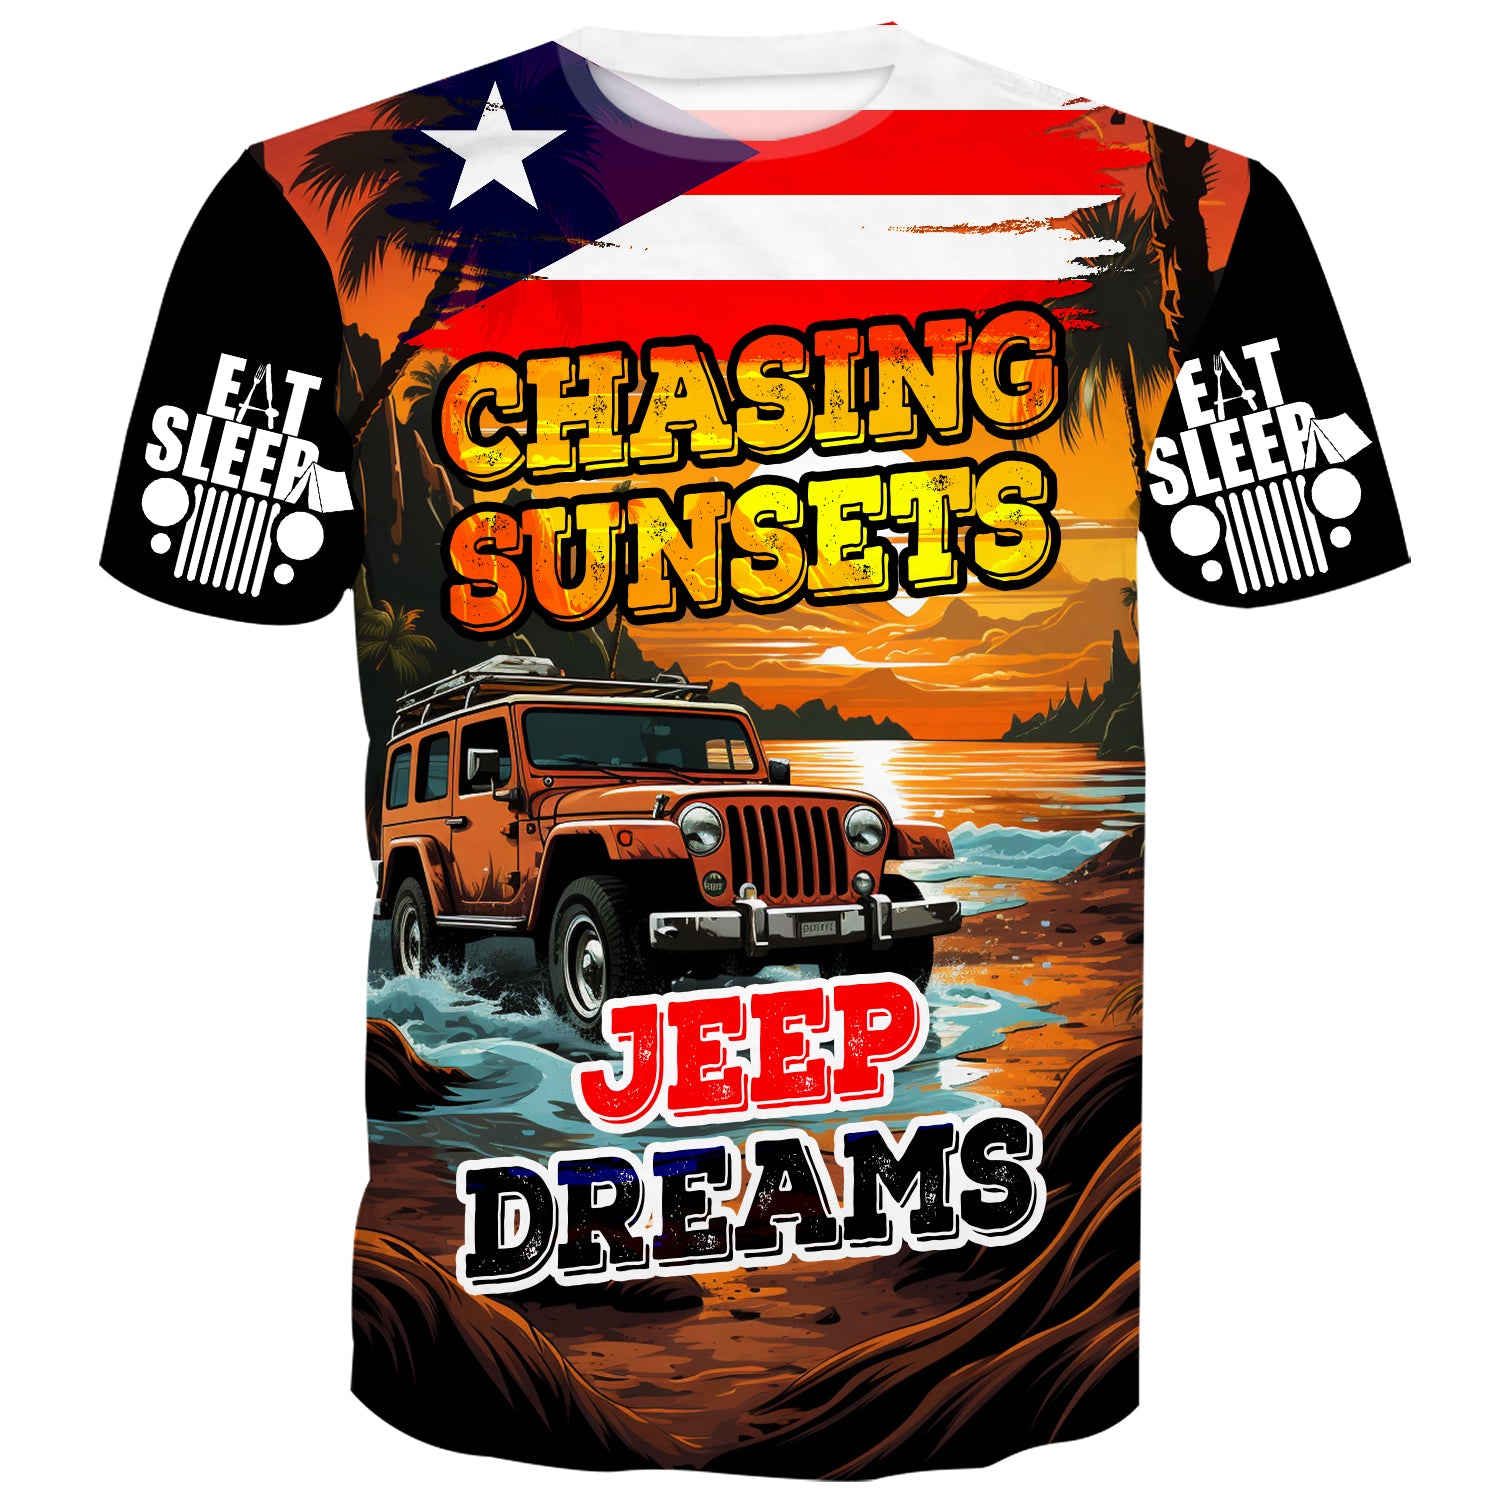 Chasing sunsets, Jeep dreams - T-Shirt